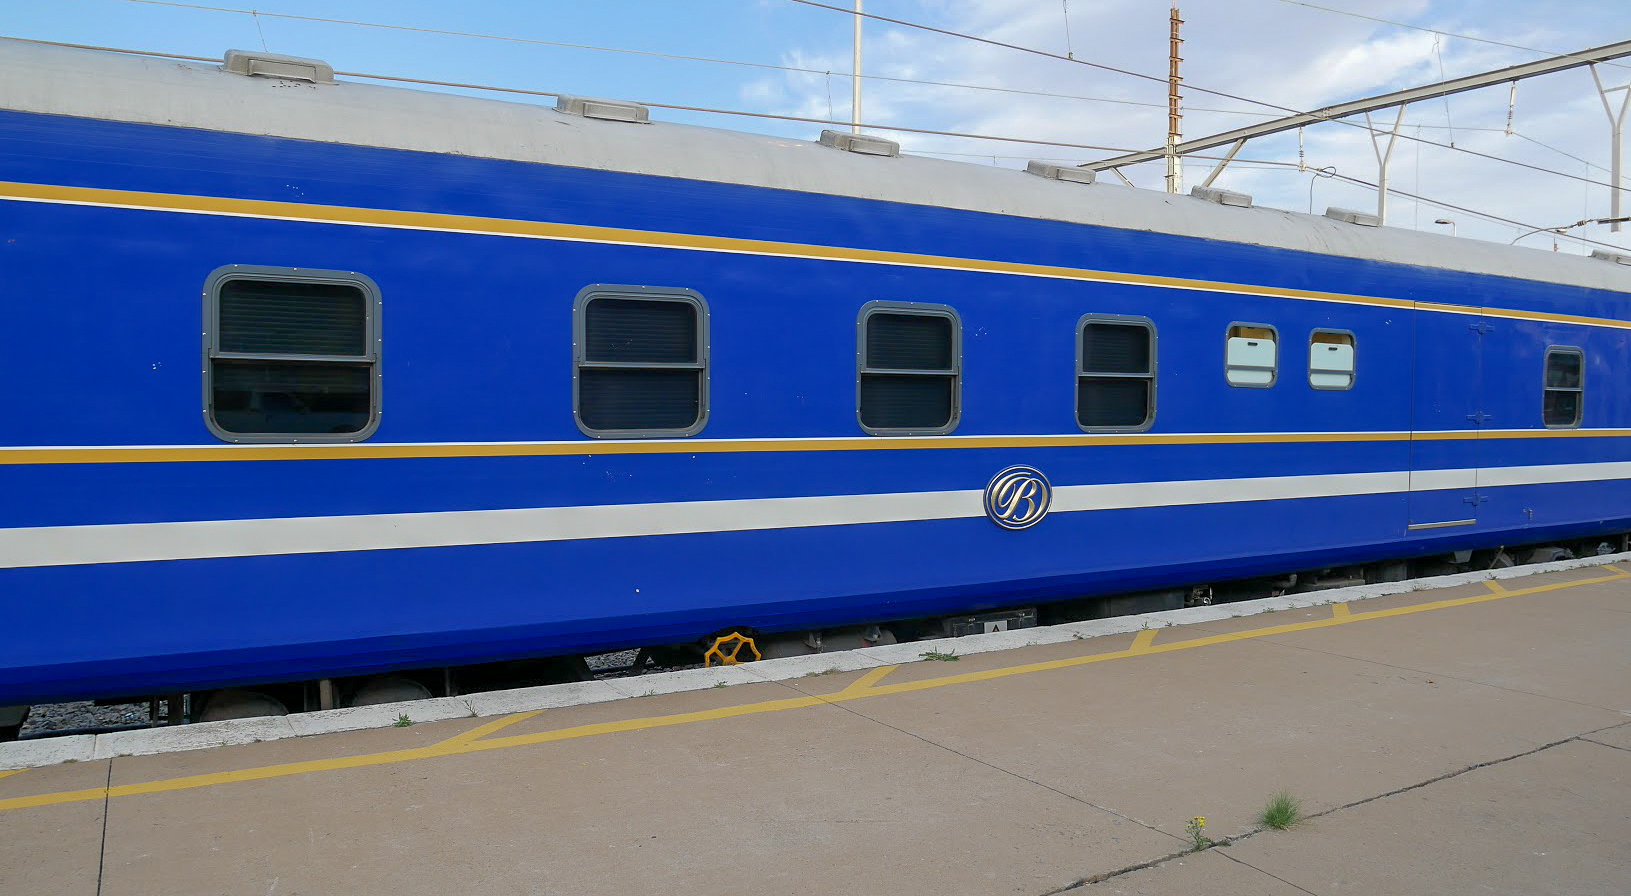 a Blue Train carriage at a station platform